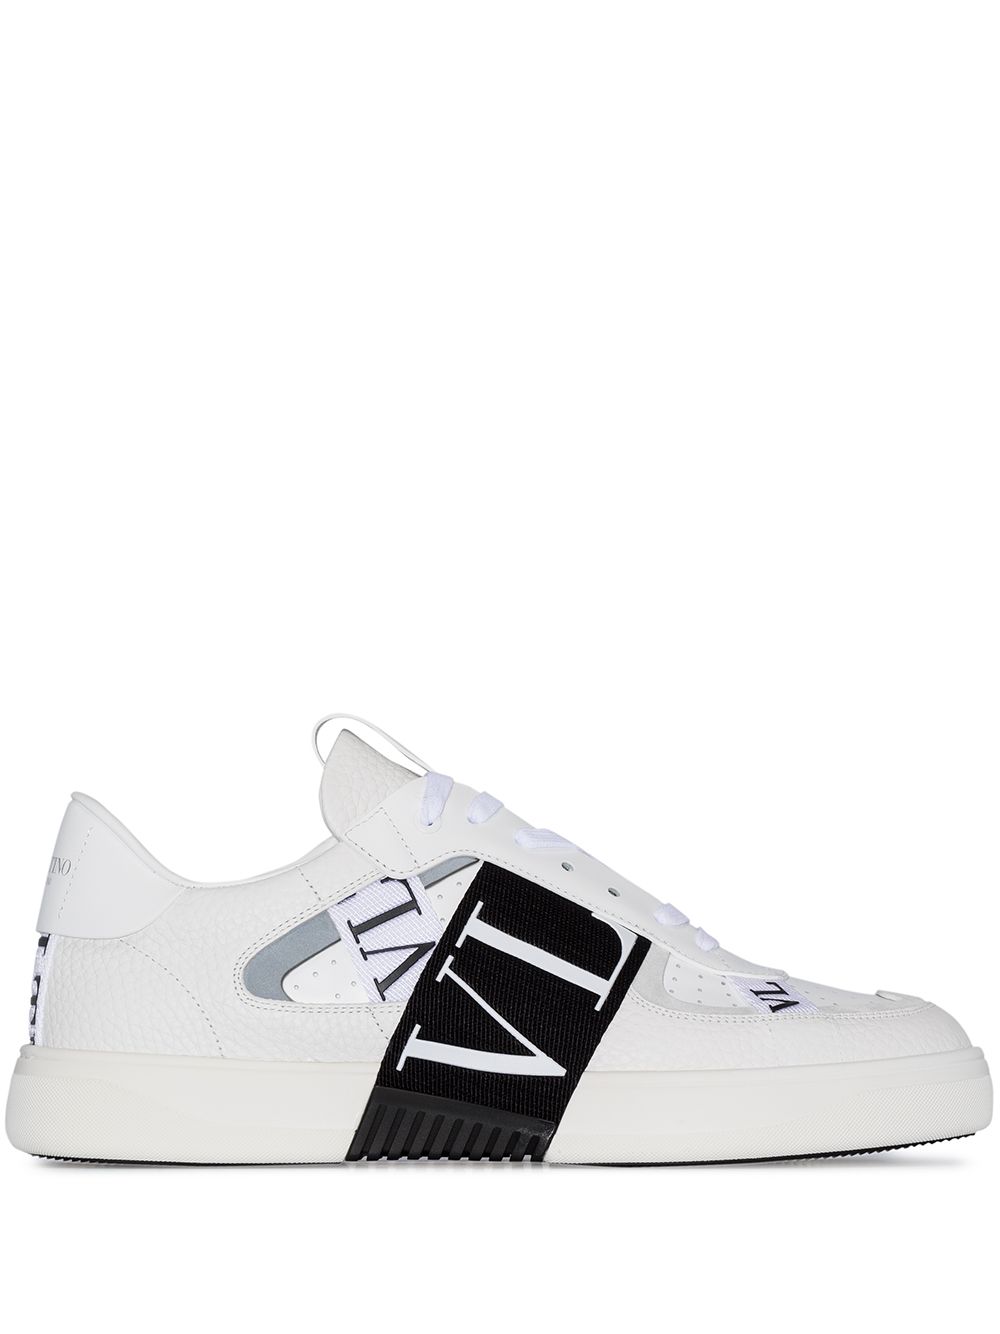 Vl7n Leather Sneakers мъжки обувки Valentino Garavani 839963585_39